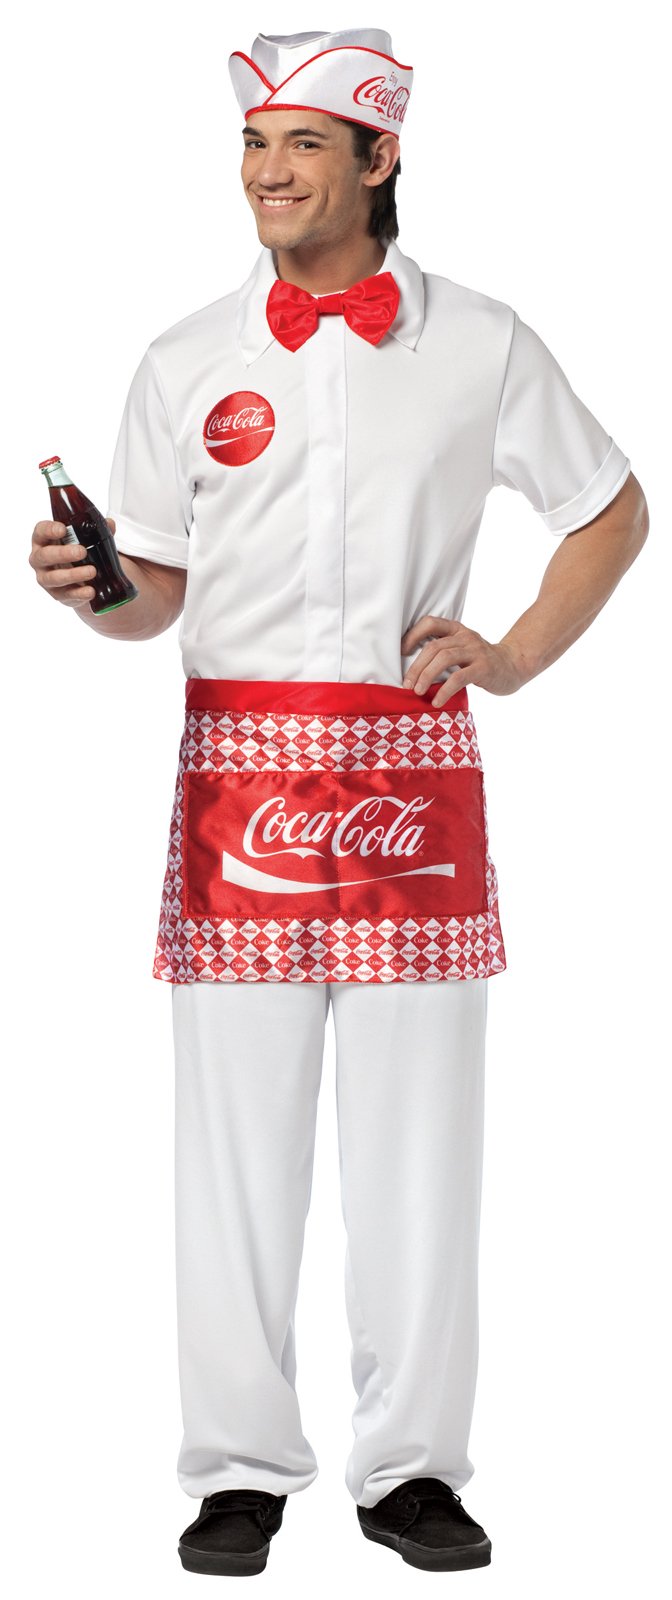 Coca-Cola - Soda Jerk Man Adult Costume